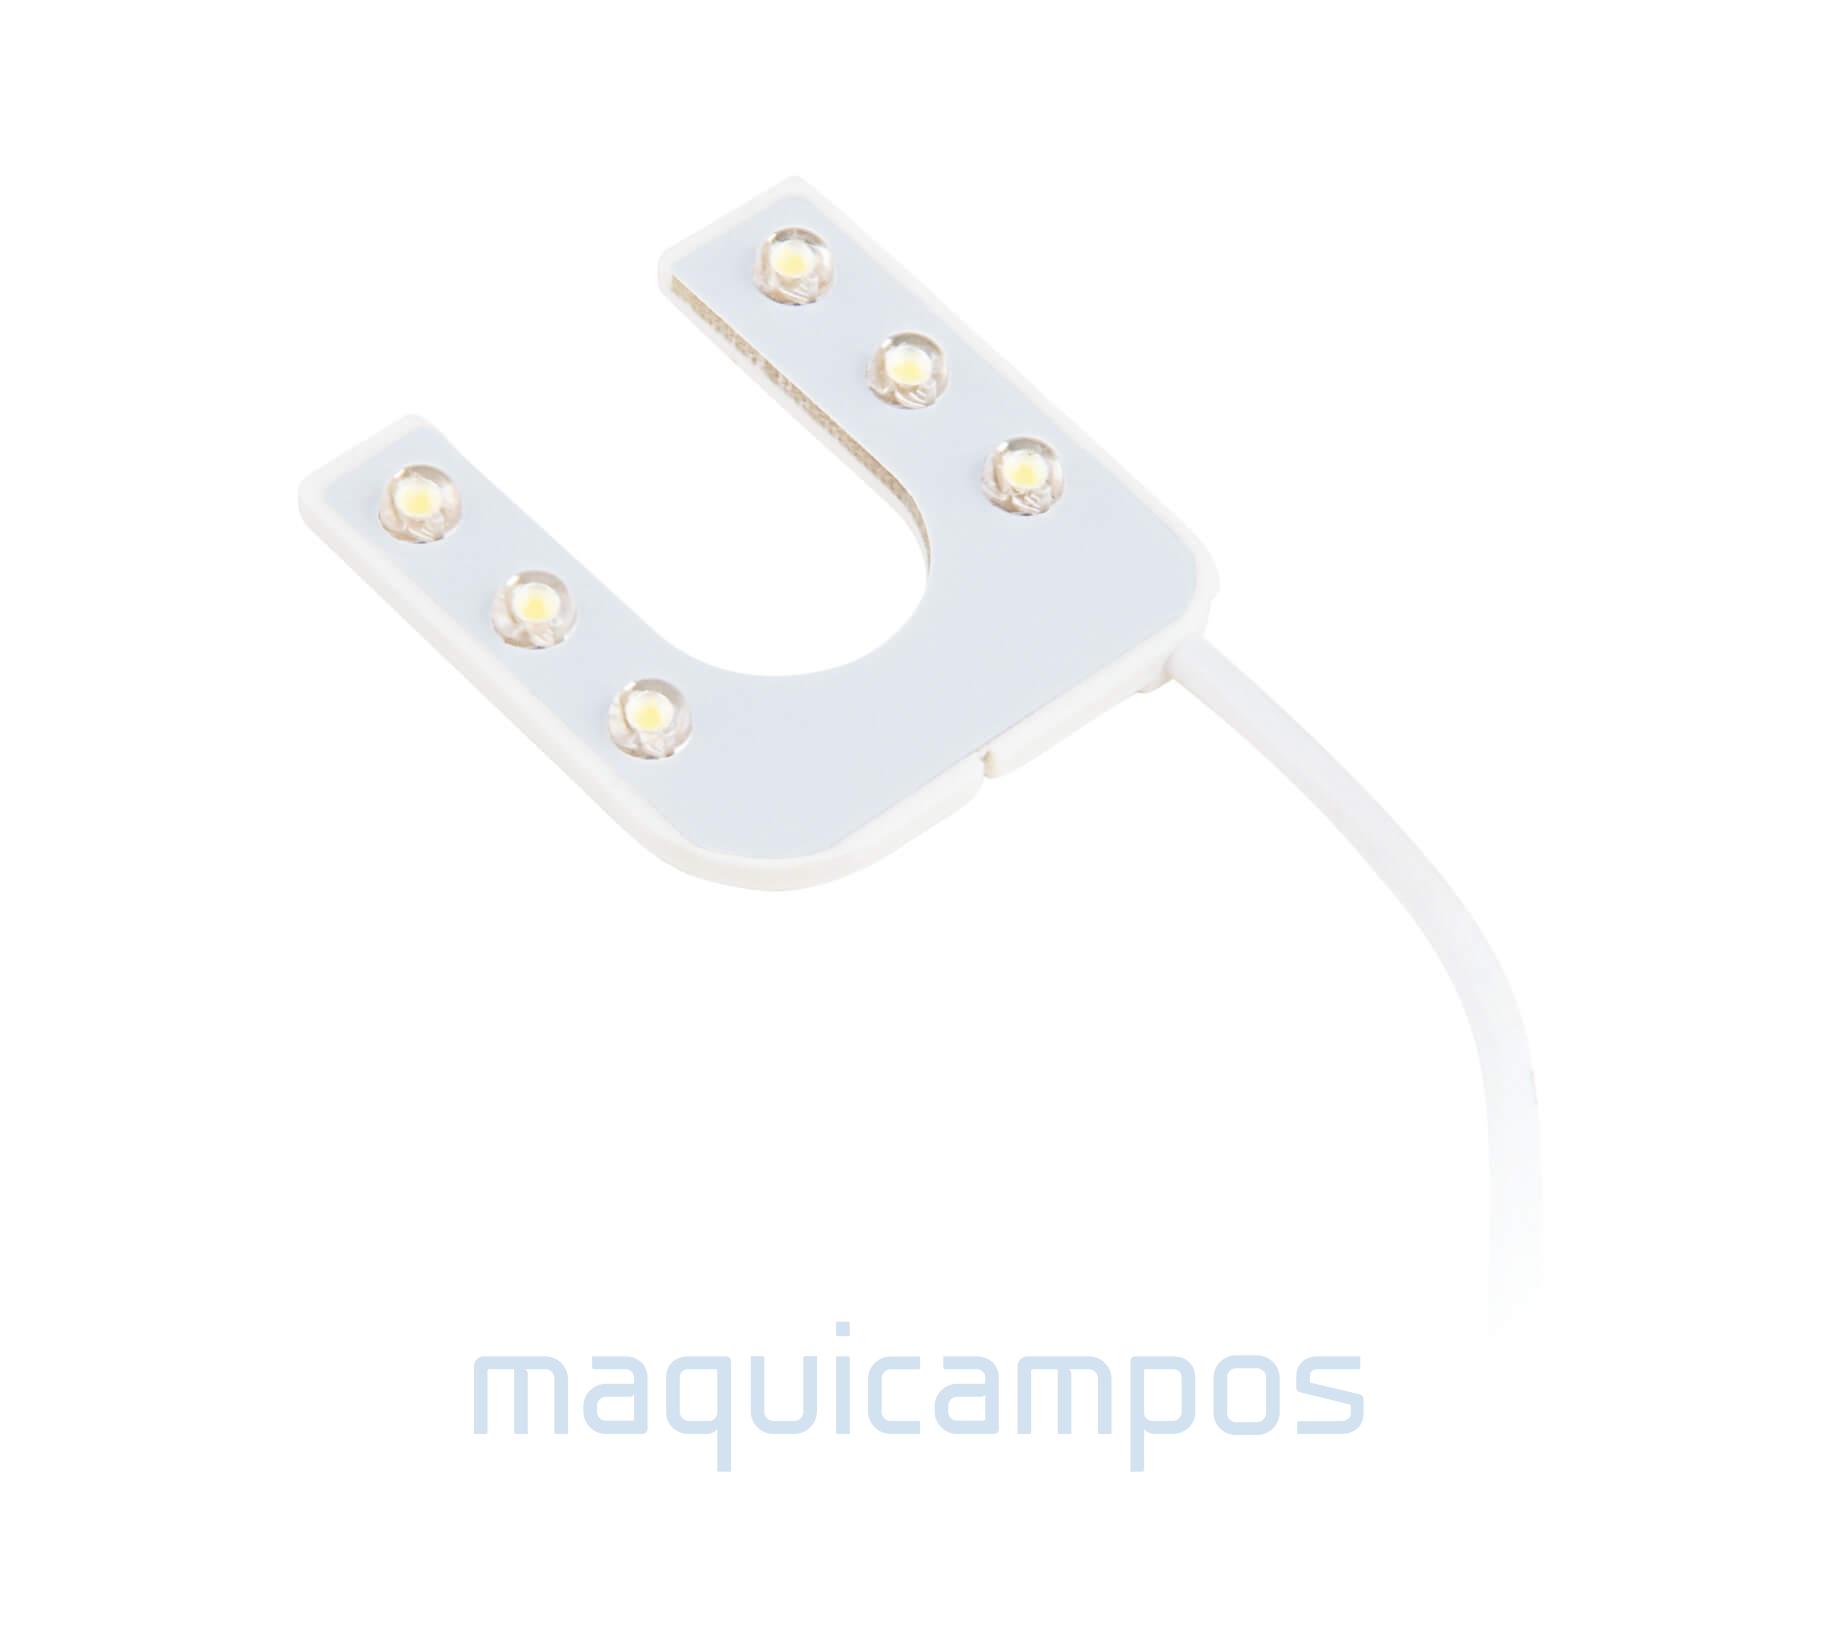 Maquic TD-6U 1W, 5V White Light